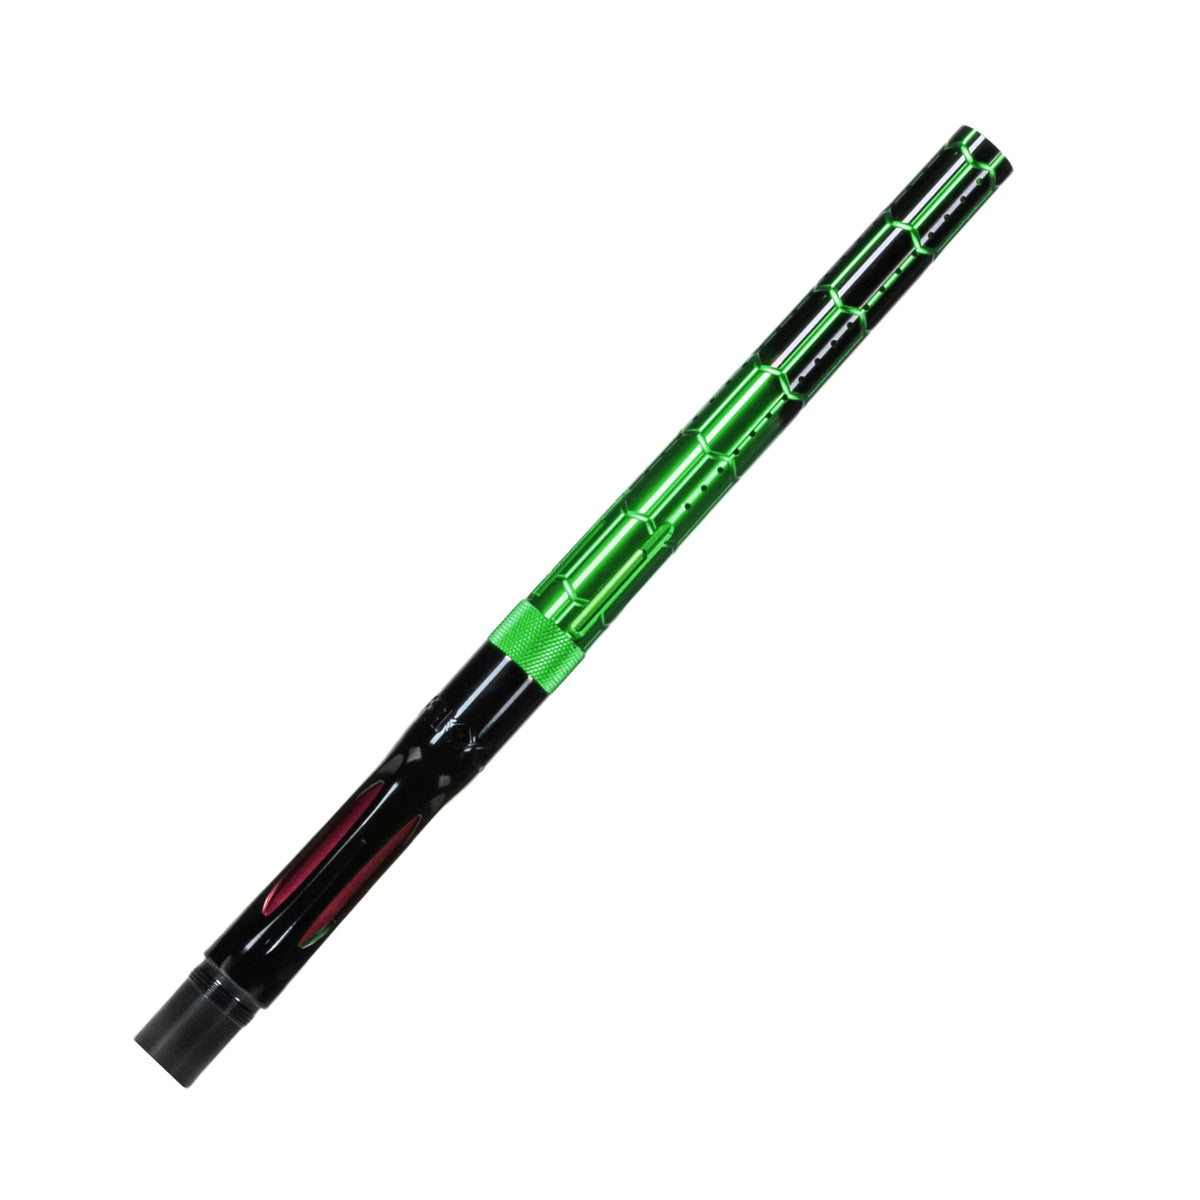 Freak XL Elite Nexus Barrel Tip | Color: Green/Black Fade